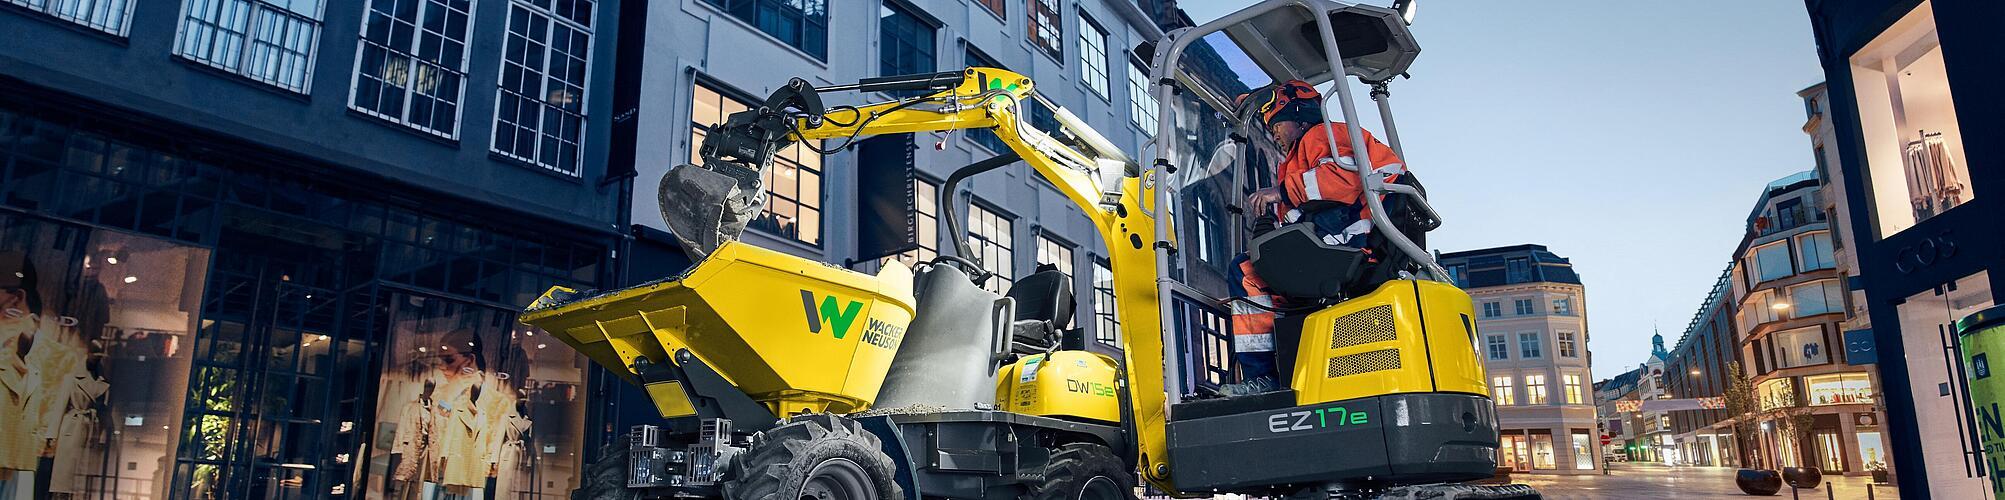 Wacker Neuson zero tail excavator EZ17e in application on a construction site in the city.